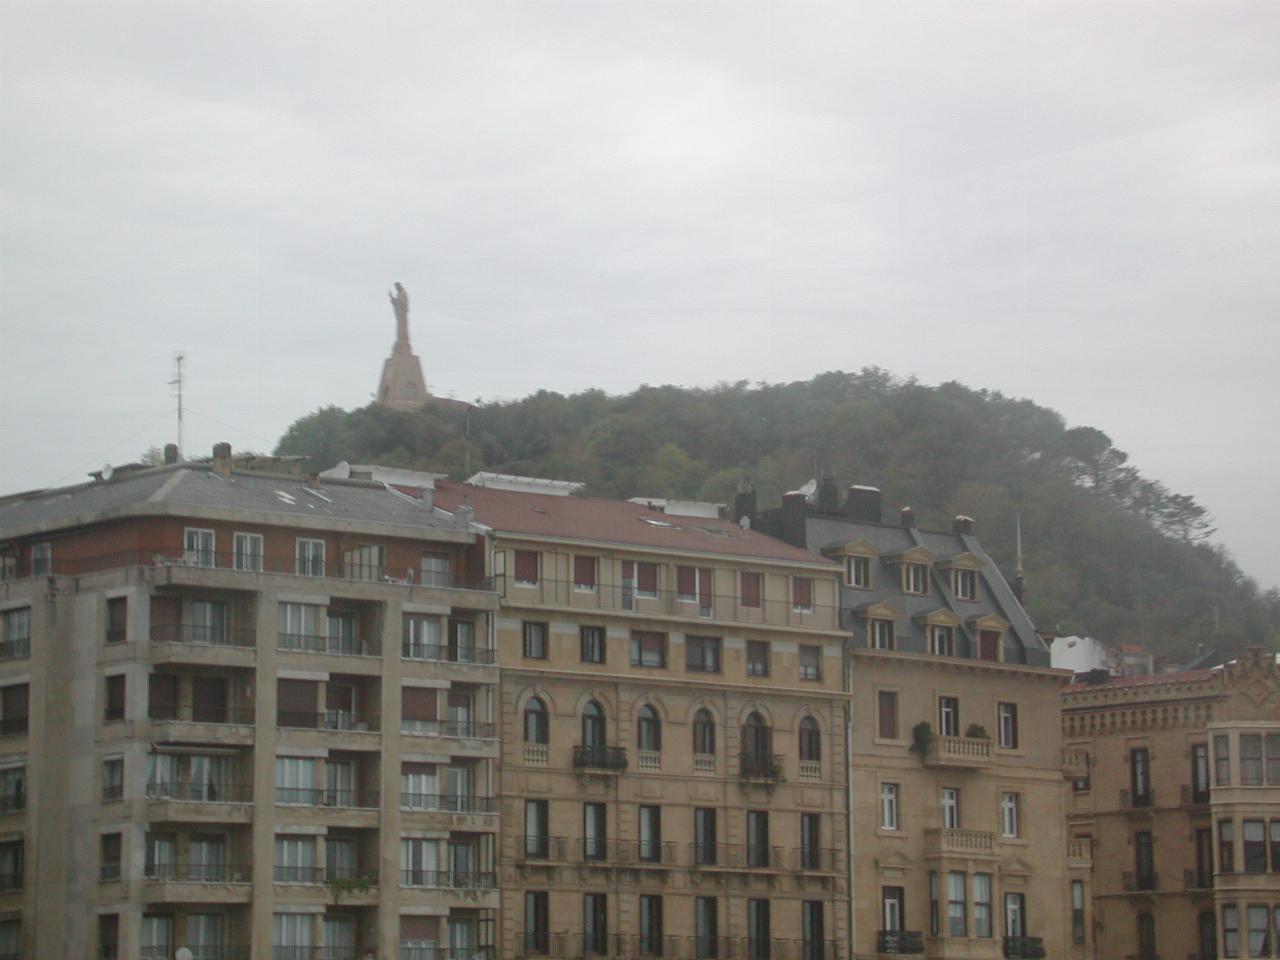 Large statue on hilltop overlooking San Sebastian, Spain